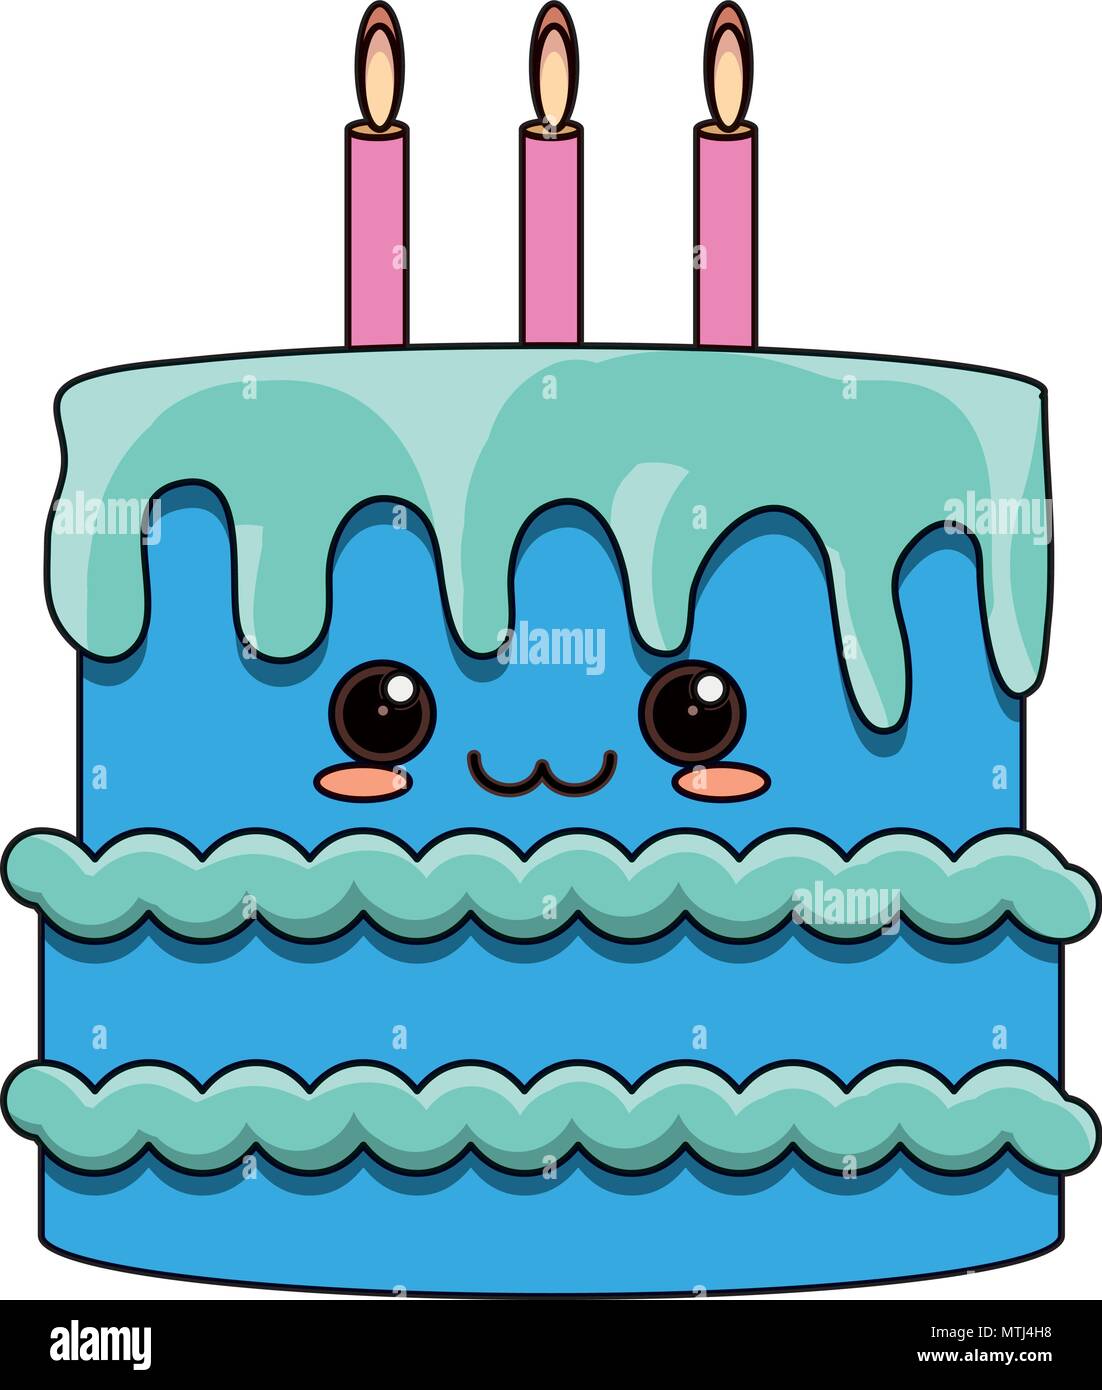 Kawaii birthday cake icon over white background, vector illustration Stock  Vector Image & Art - Alamy